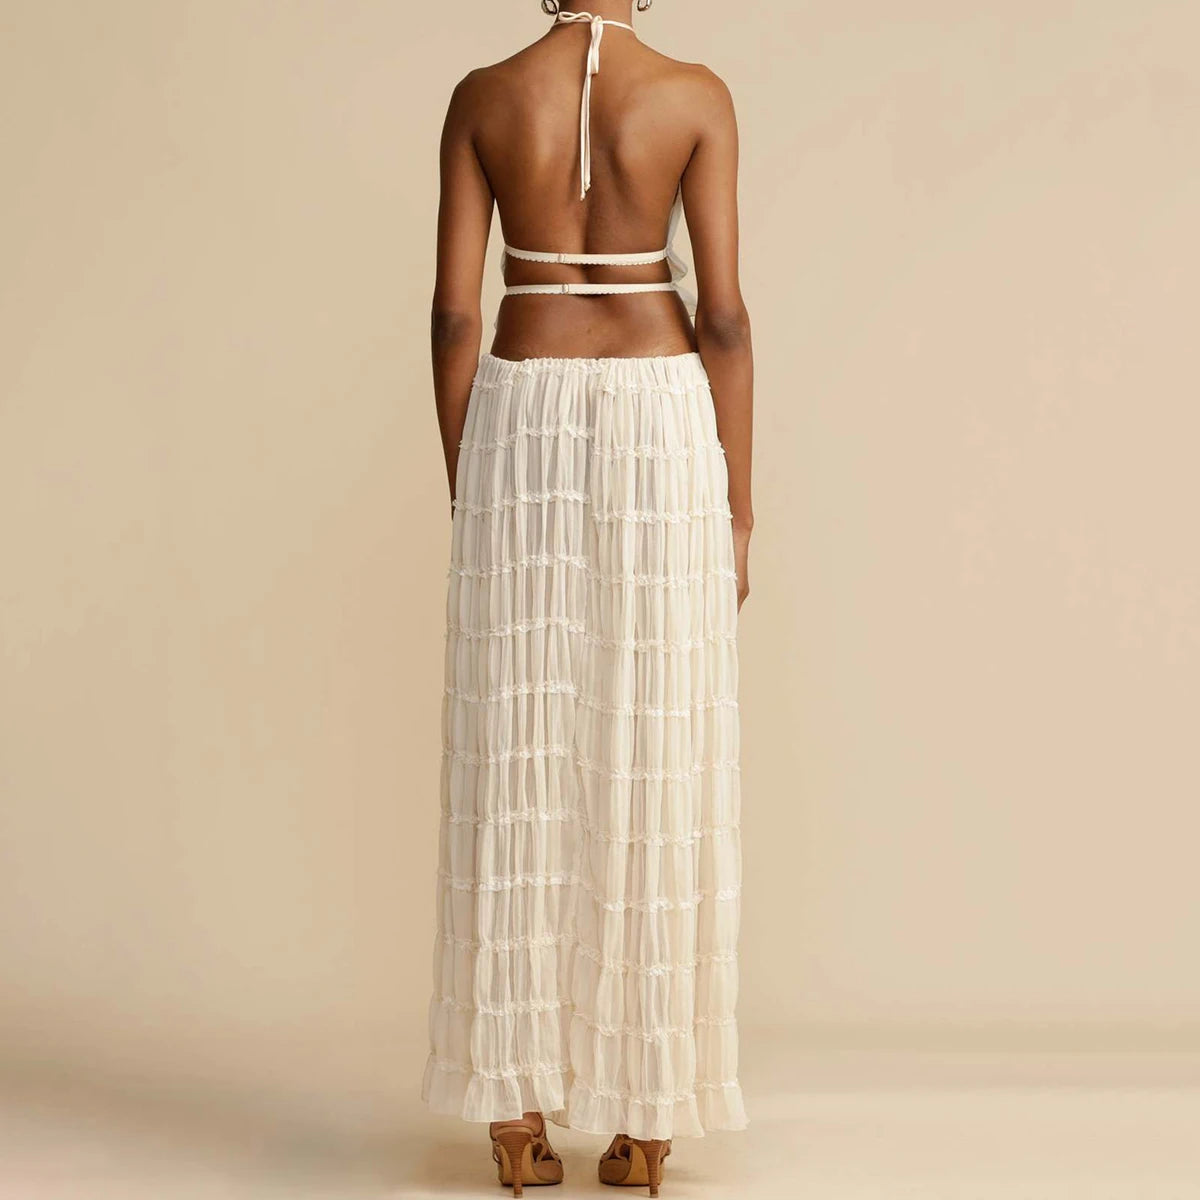 Off White Sleeveless Backless Cropped Halter Tops & Drawstring Long Skirt Sets